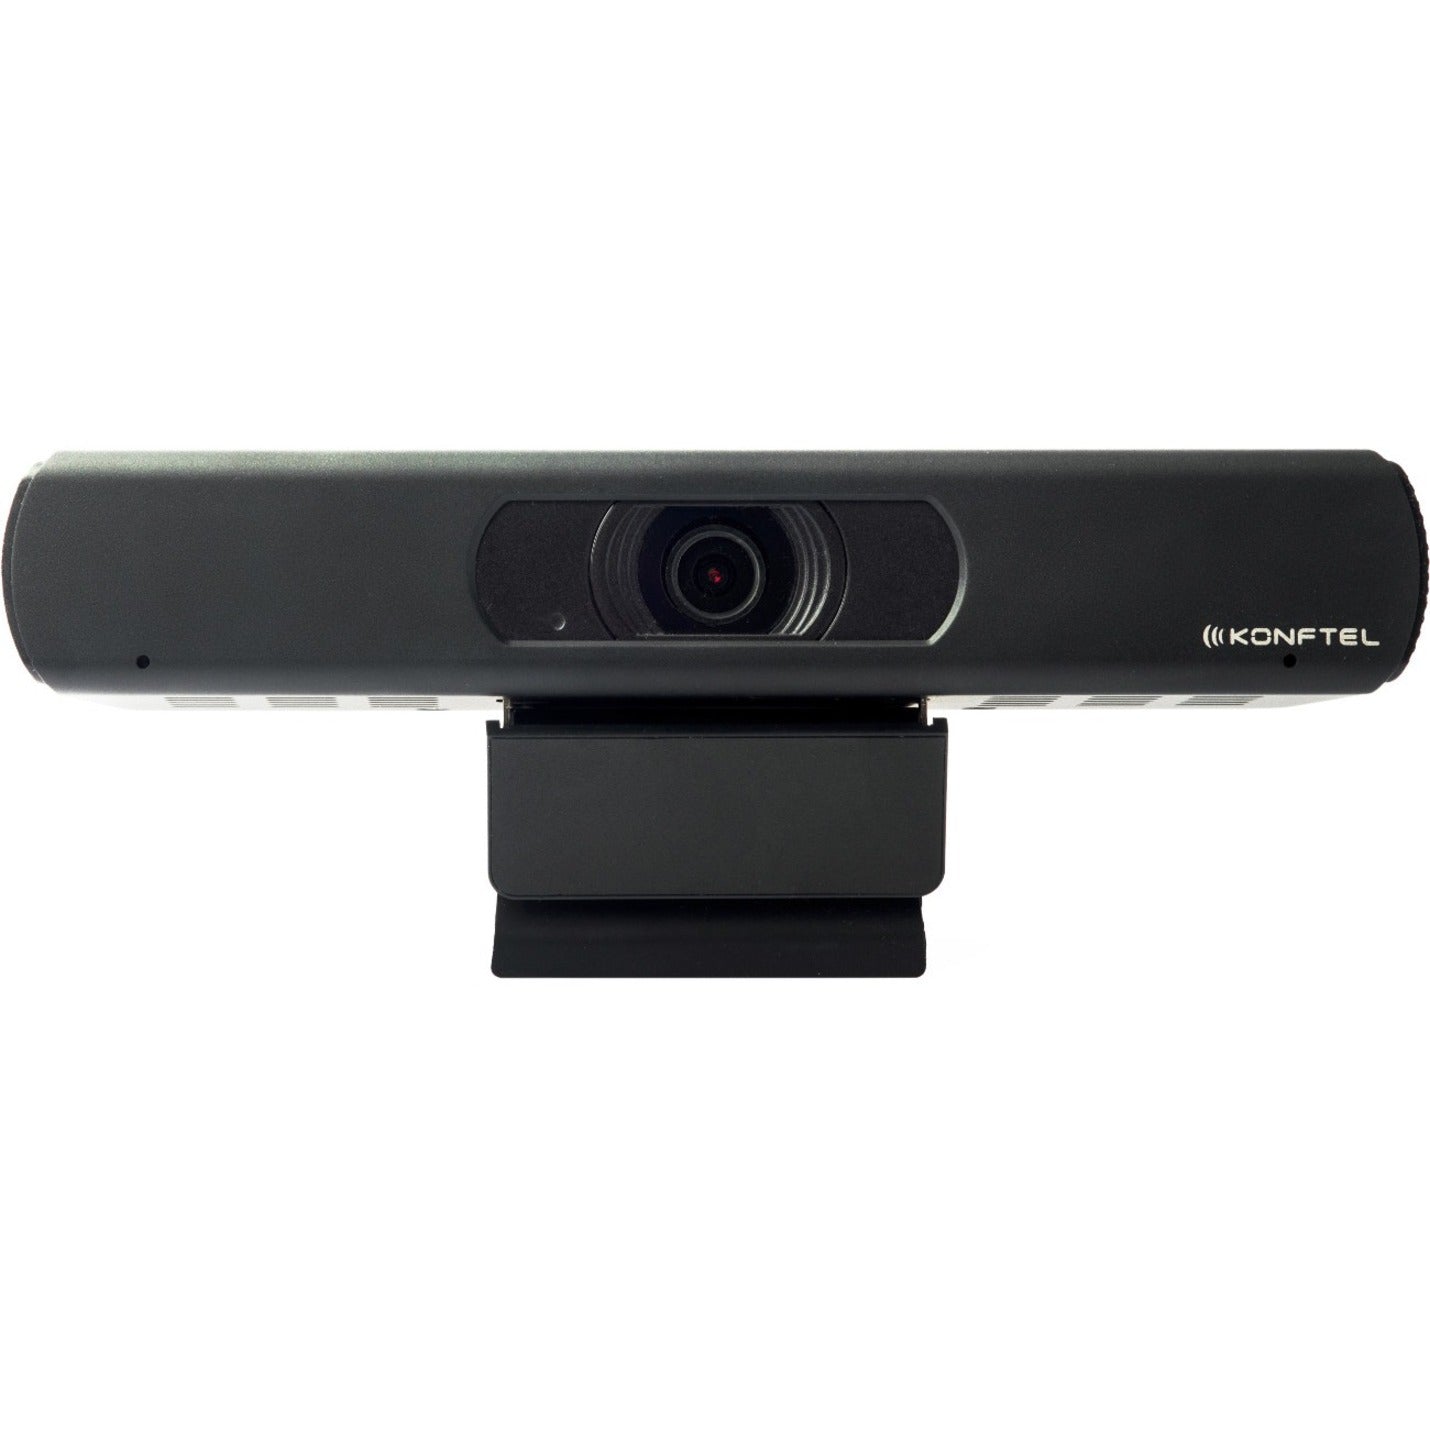 Konftel 931201001 Cam20 Video Conferencing Camera, 4K Ultra HD, 123o Field of View, USB, Remote Control